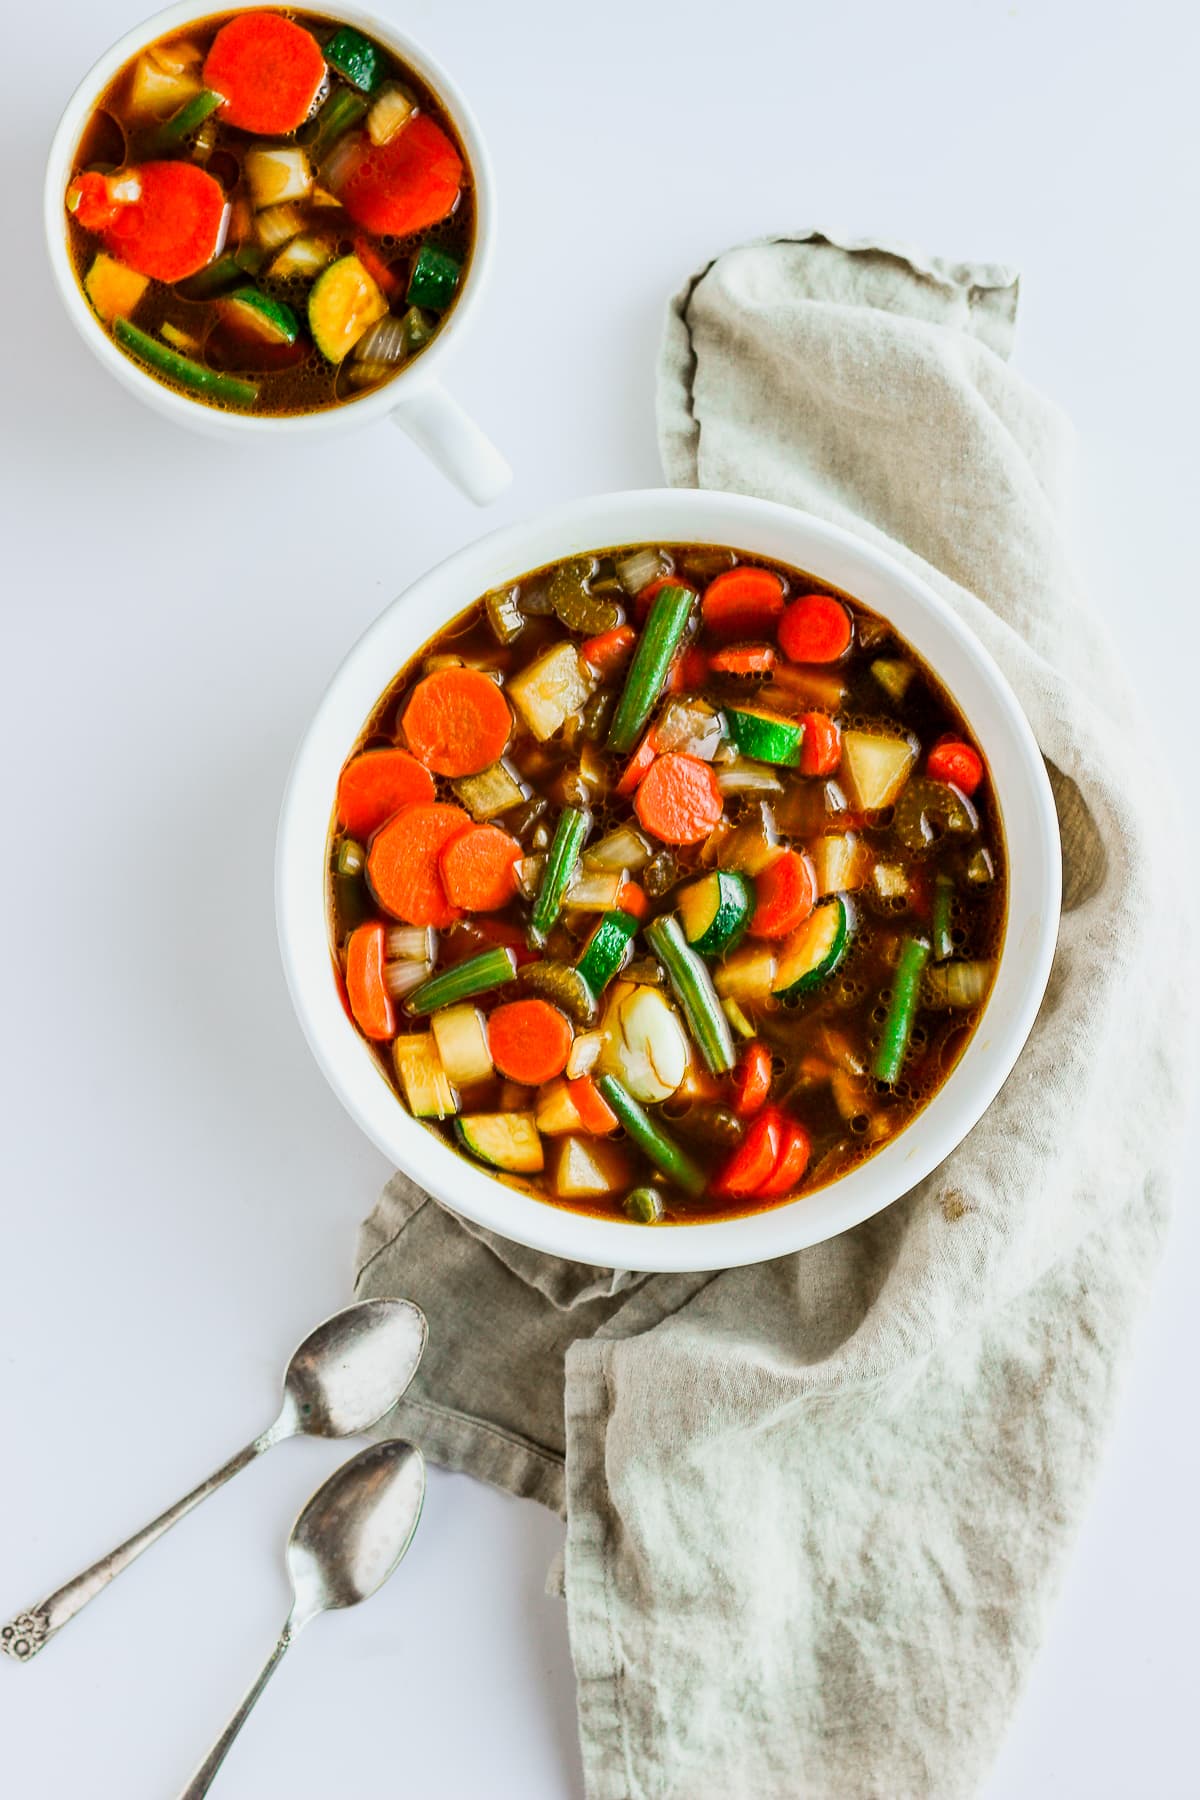 Savory Whole30 Vegetabe Soup